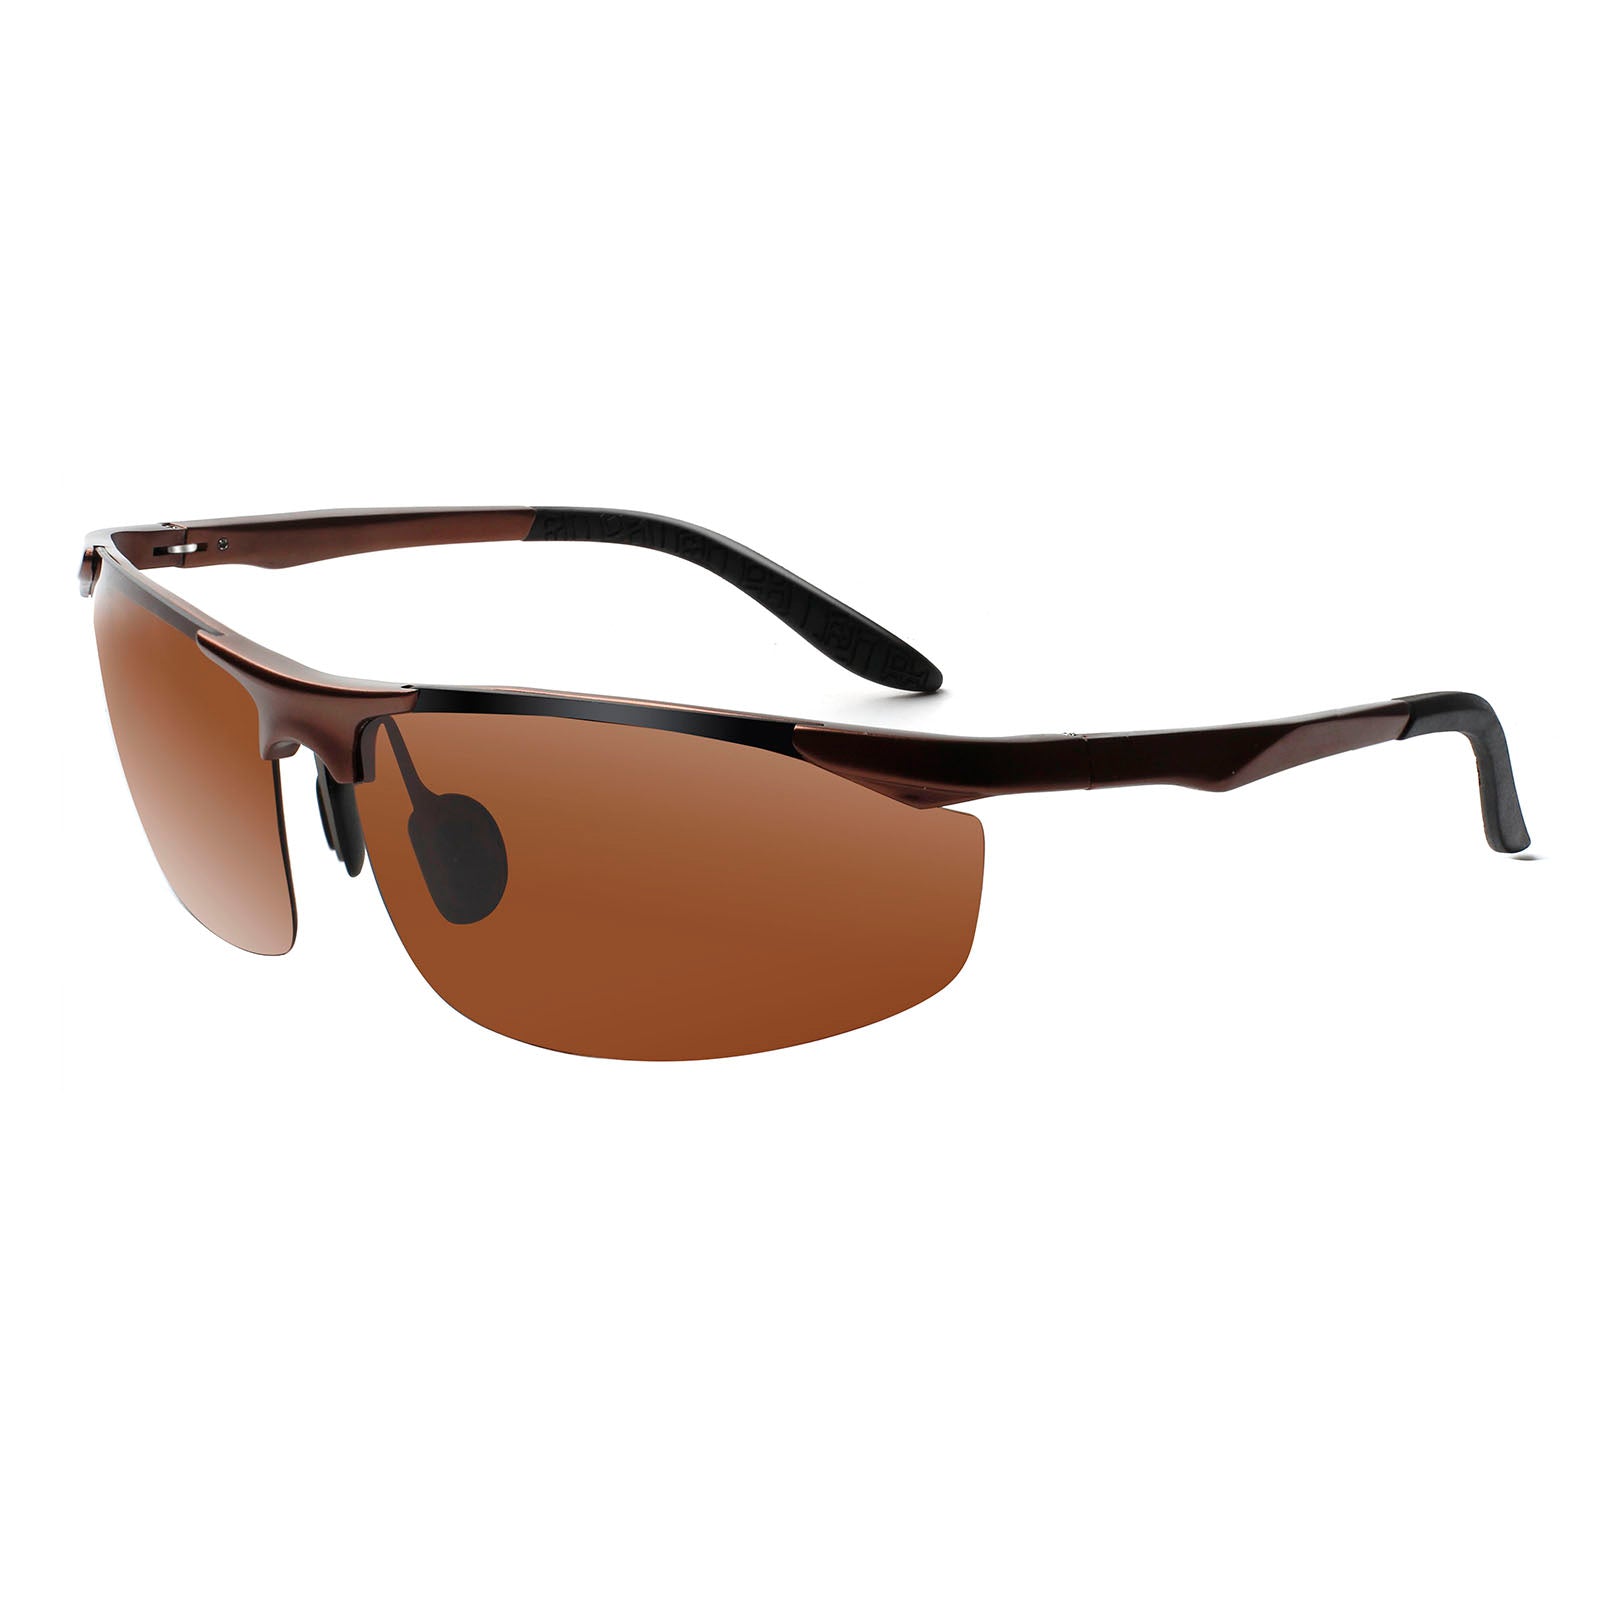 Mens Sports Polarized Sunglasses for Men - Al-Mg metal 8179